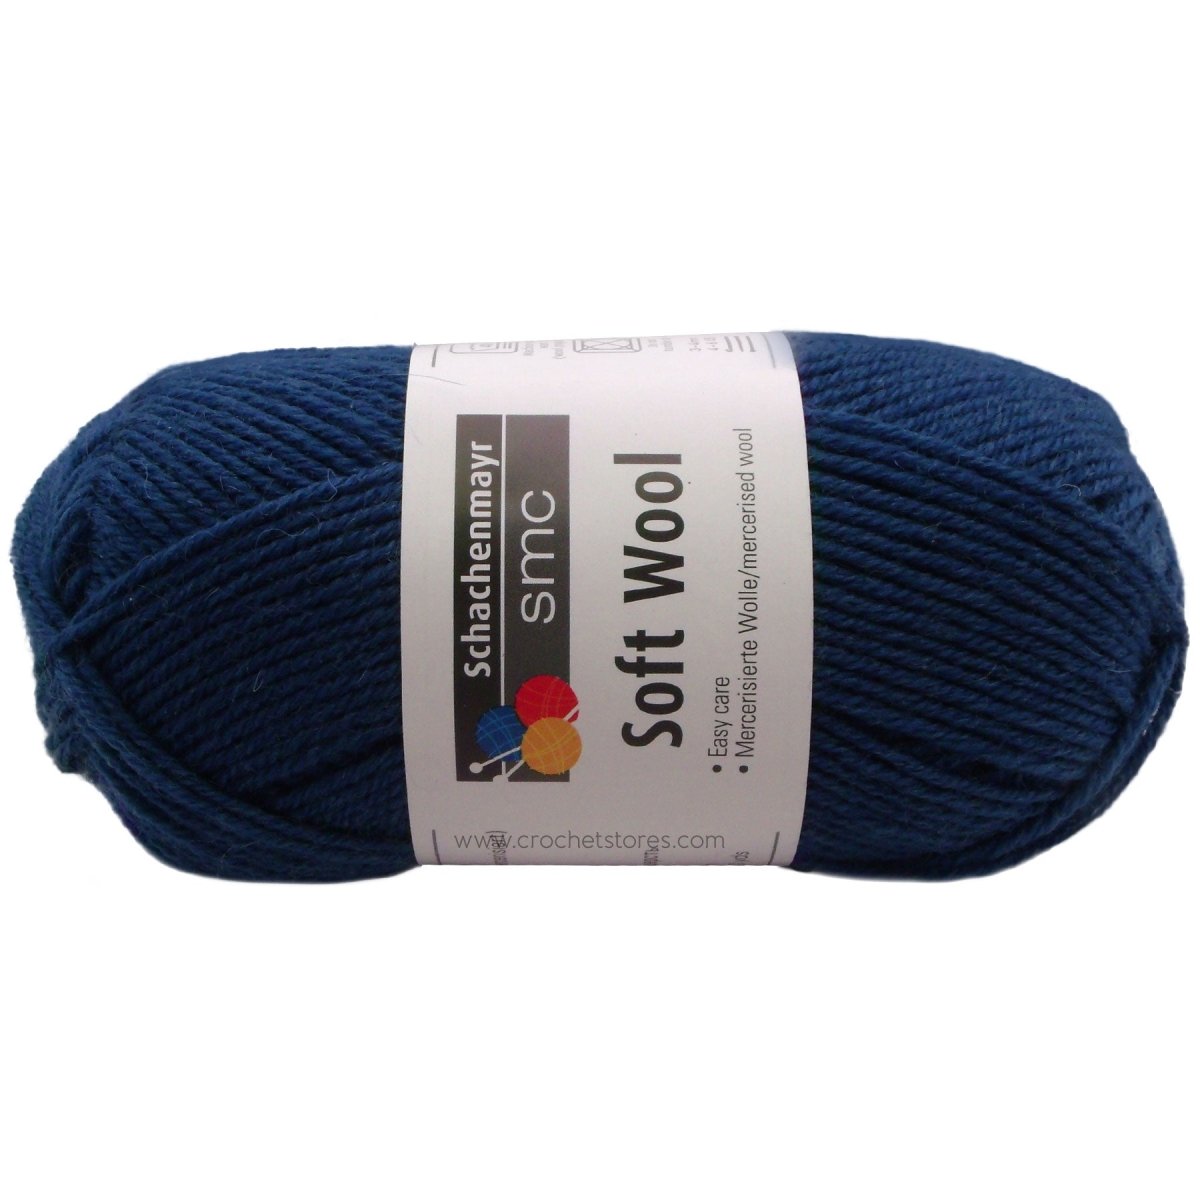 SOFT WOOL - Crochetstores9807536-534082700938377